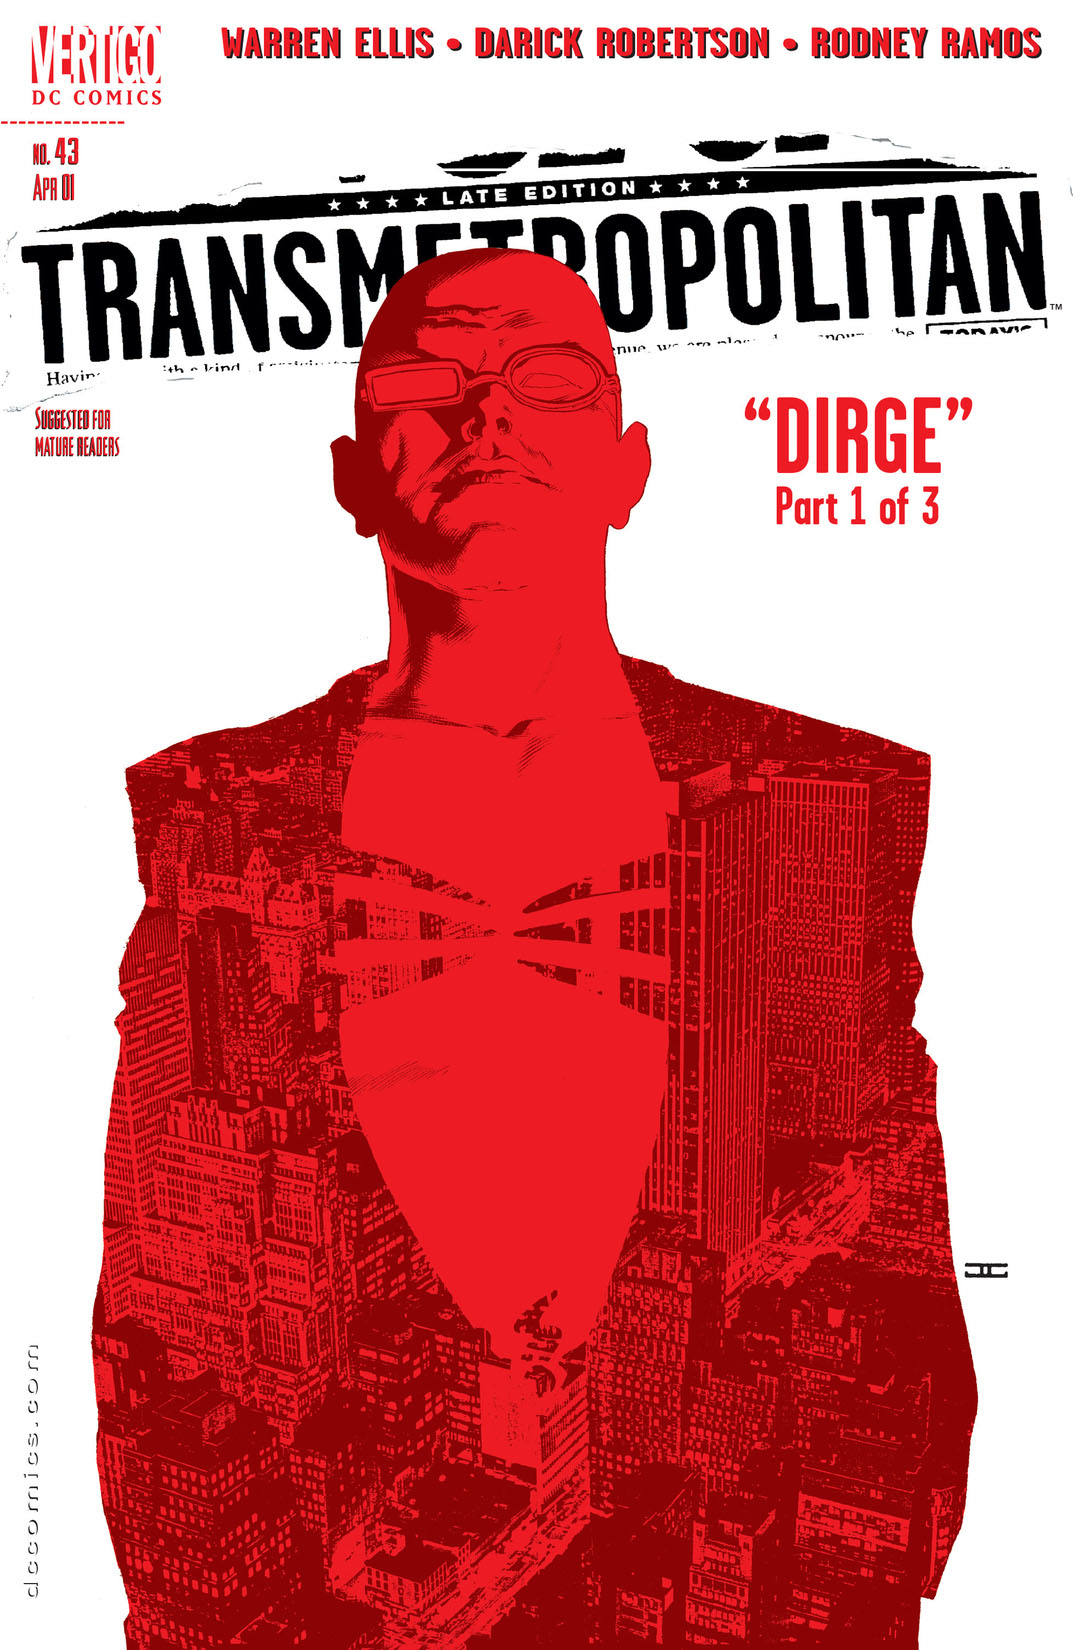 Transmetropolitan #43 preview images